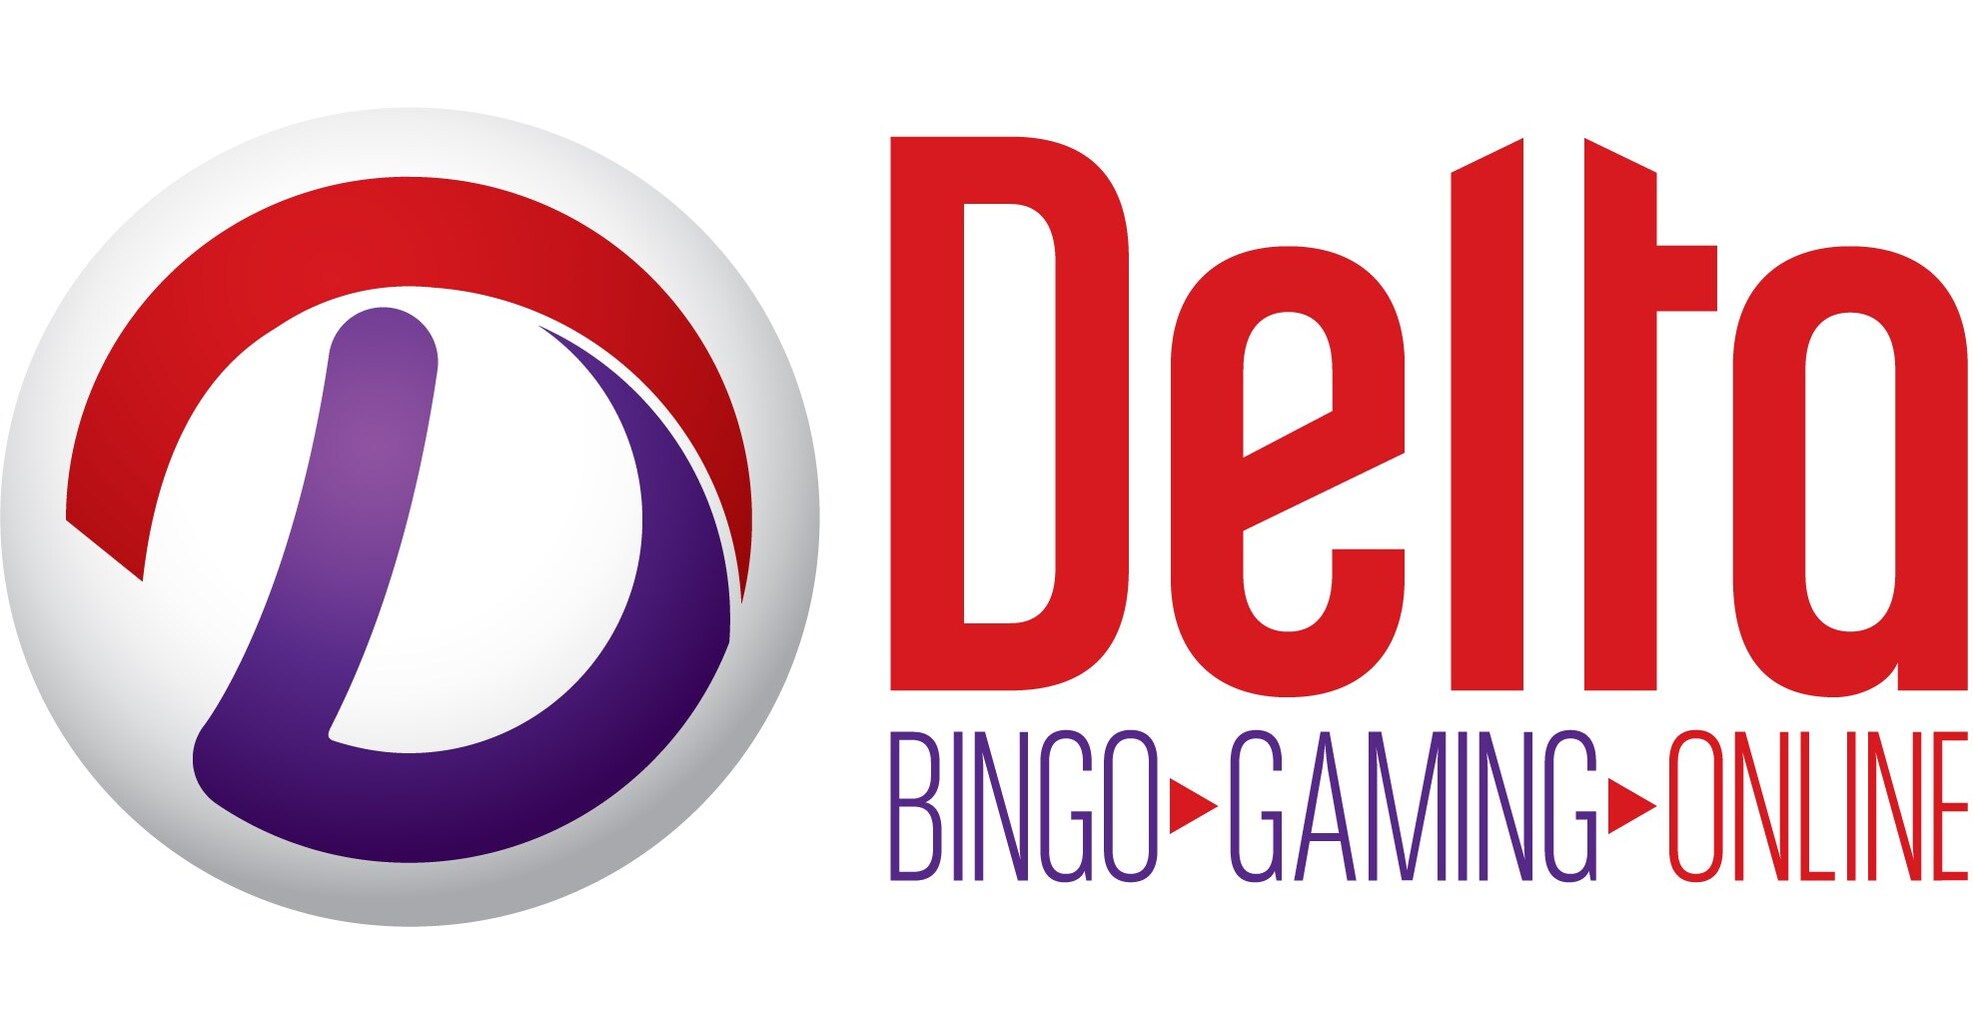 Delta Bingo Online Receives Official Responsible Gambling Accreditation